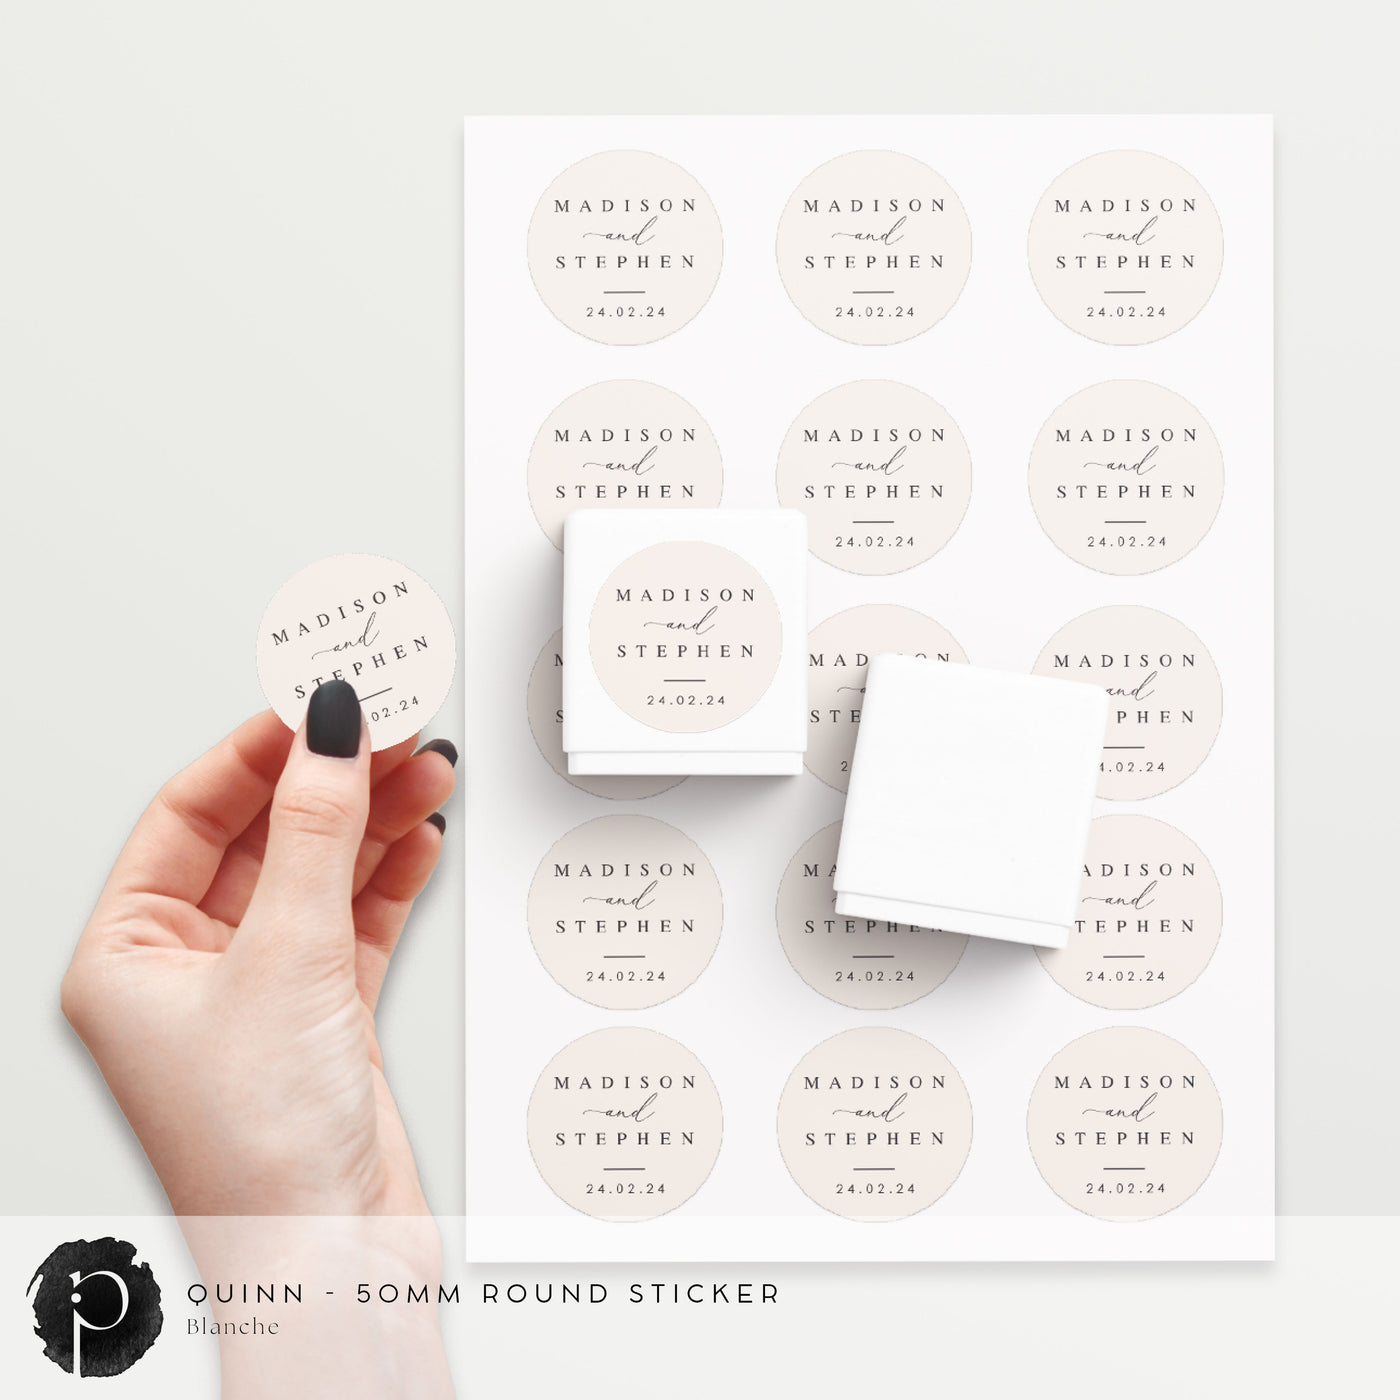 Quinn - Stickers/Seals